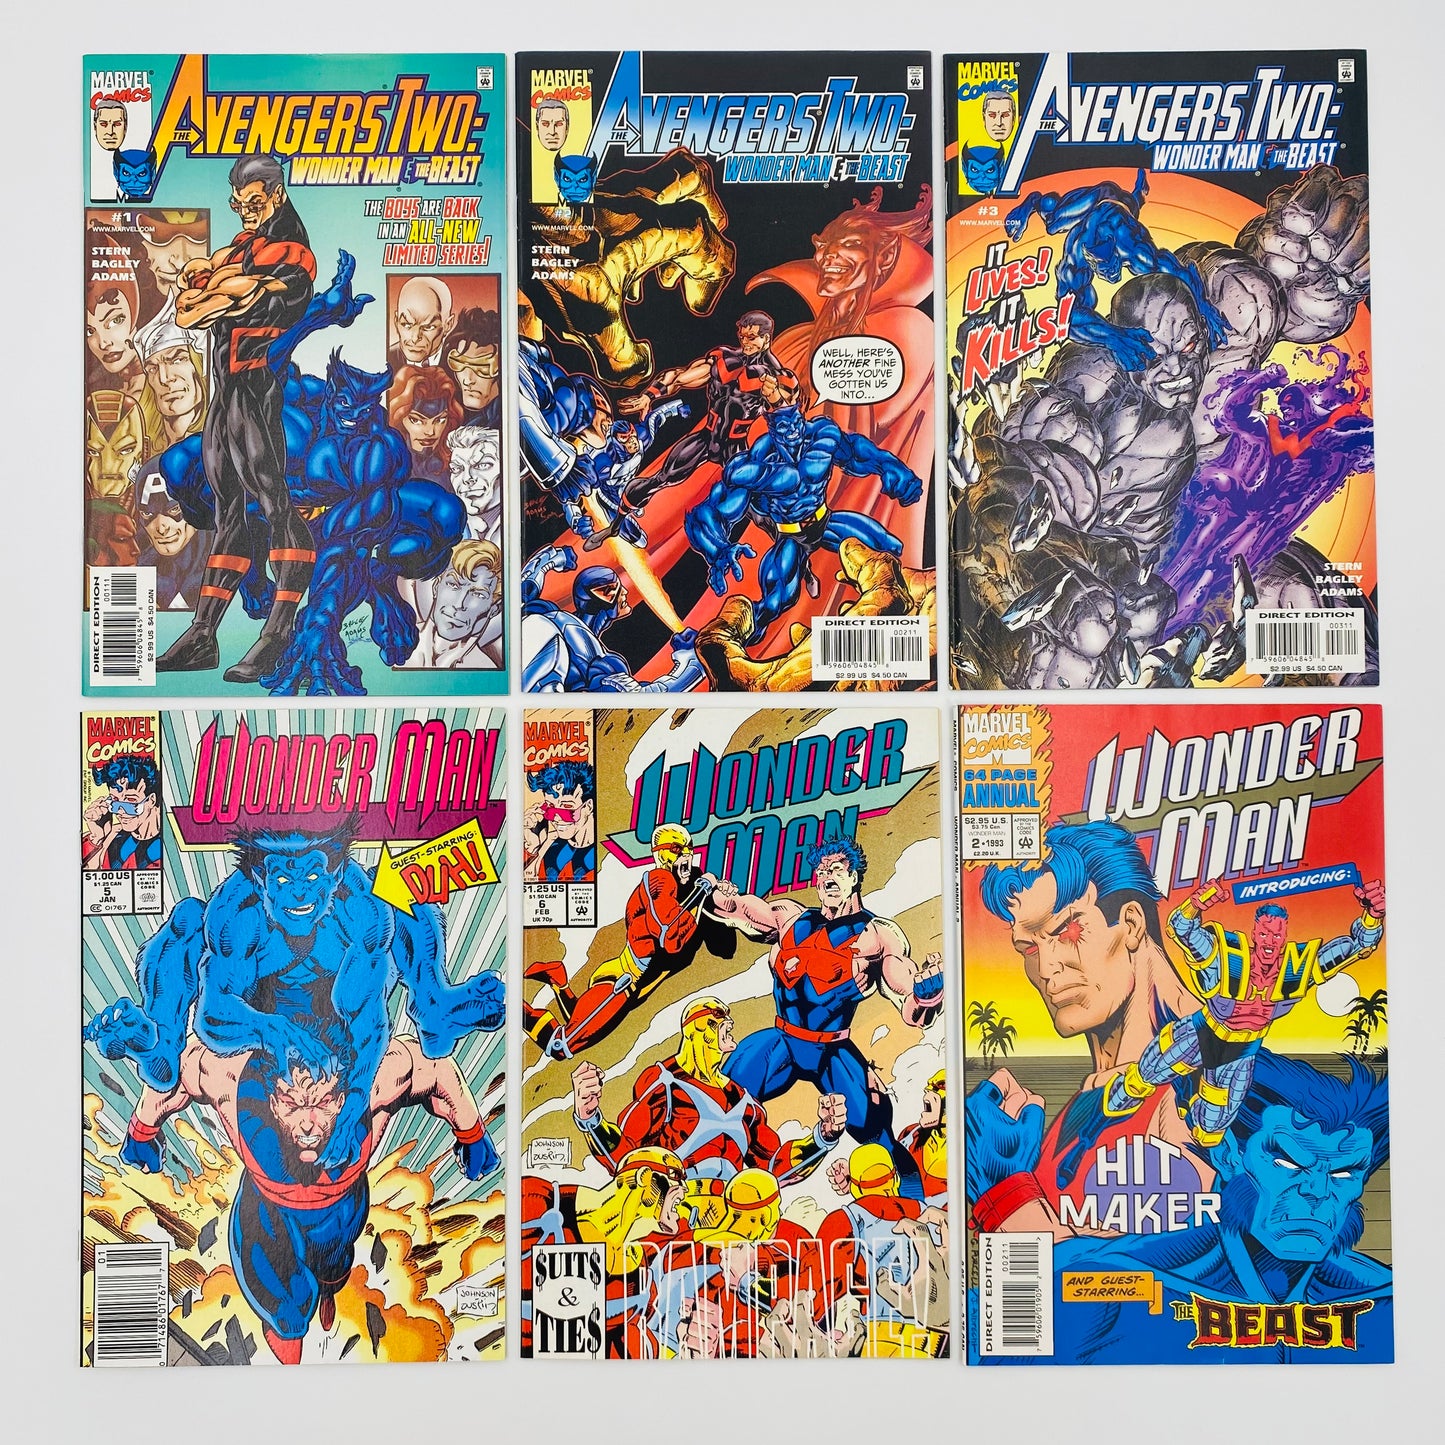 Wonder Man & Beast Fun Pack: Avengers Two Wonder Man and the Beast #1-3 (2000) Wonder Man #5-6 (1992) Wonder Man Annual #2 (1993) Wonder Man My Fair Super Hero #1-5 (2007) Marvel